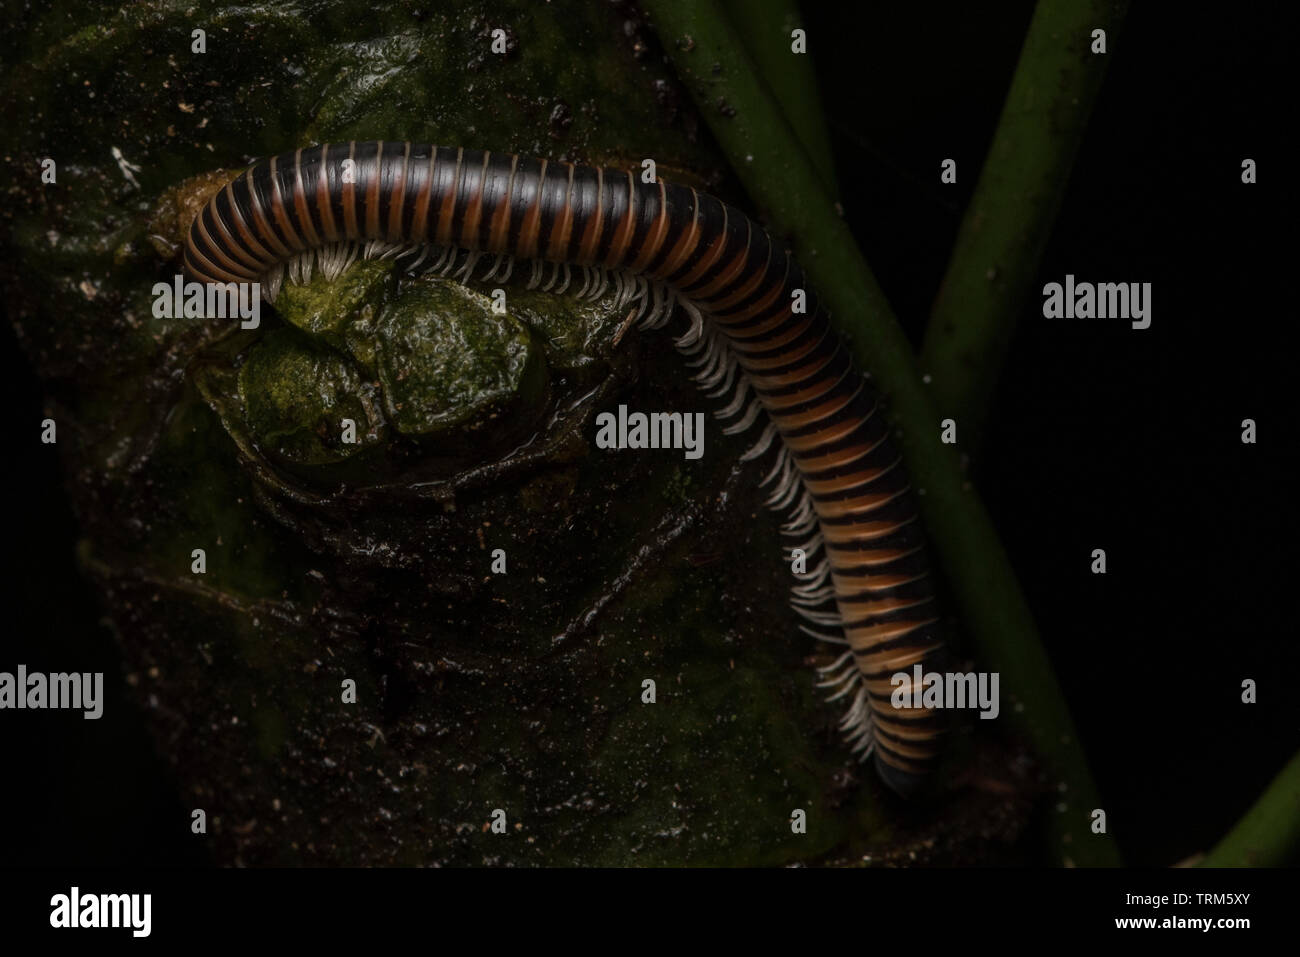 A millipede from the Amazon rainforest in Ecuador. Stock Photo